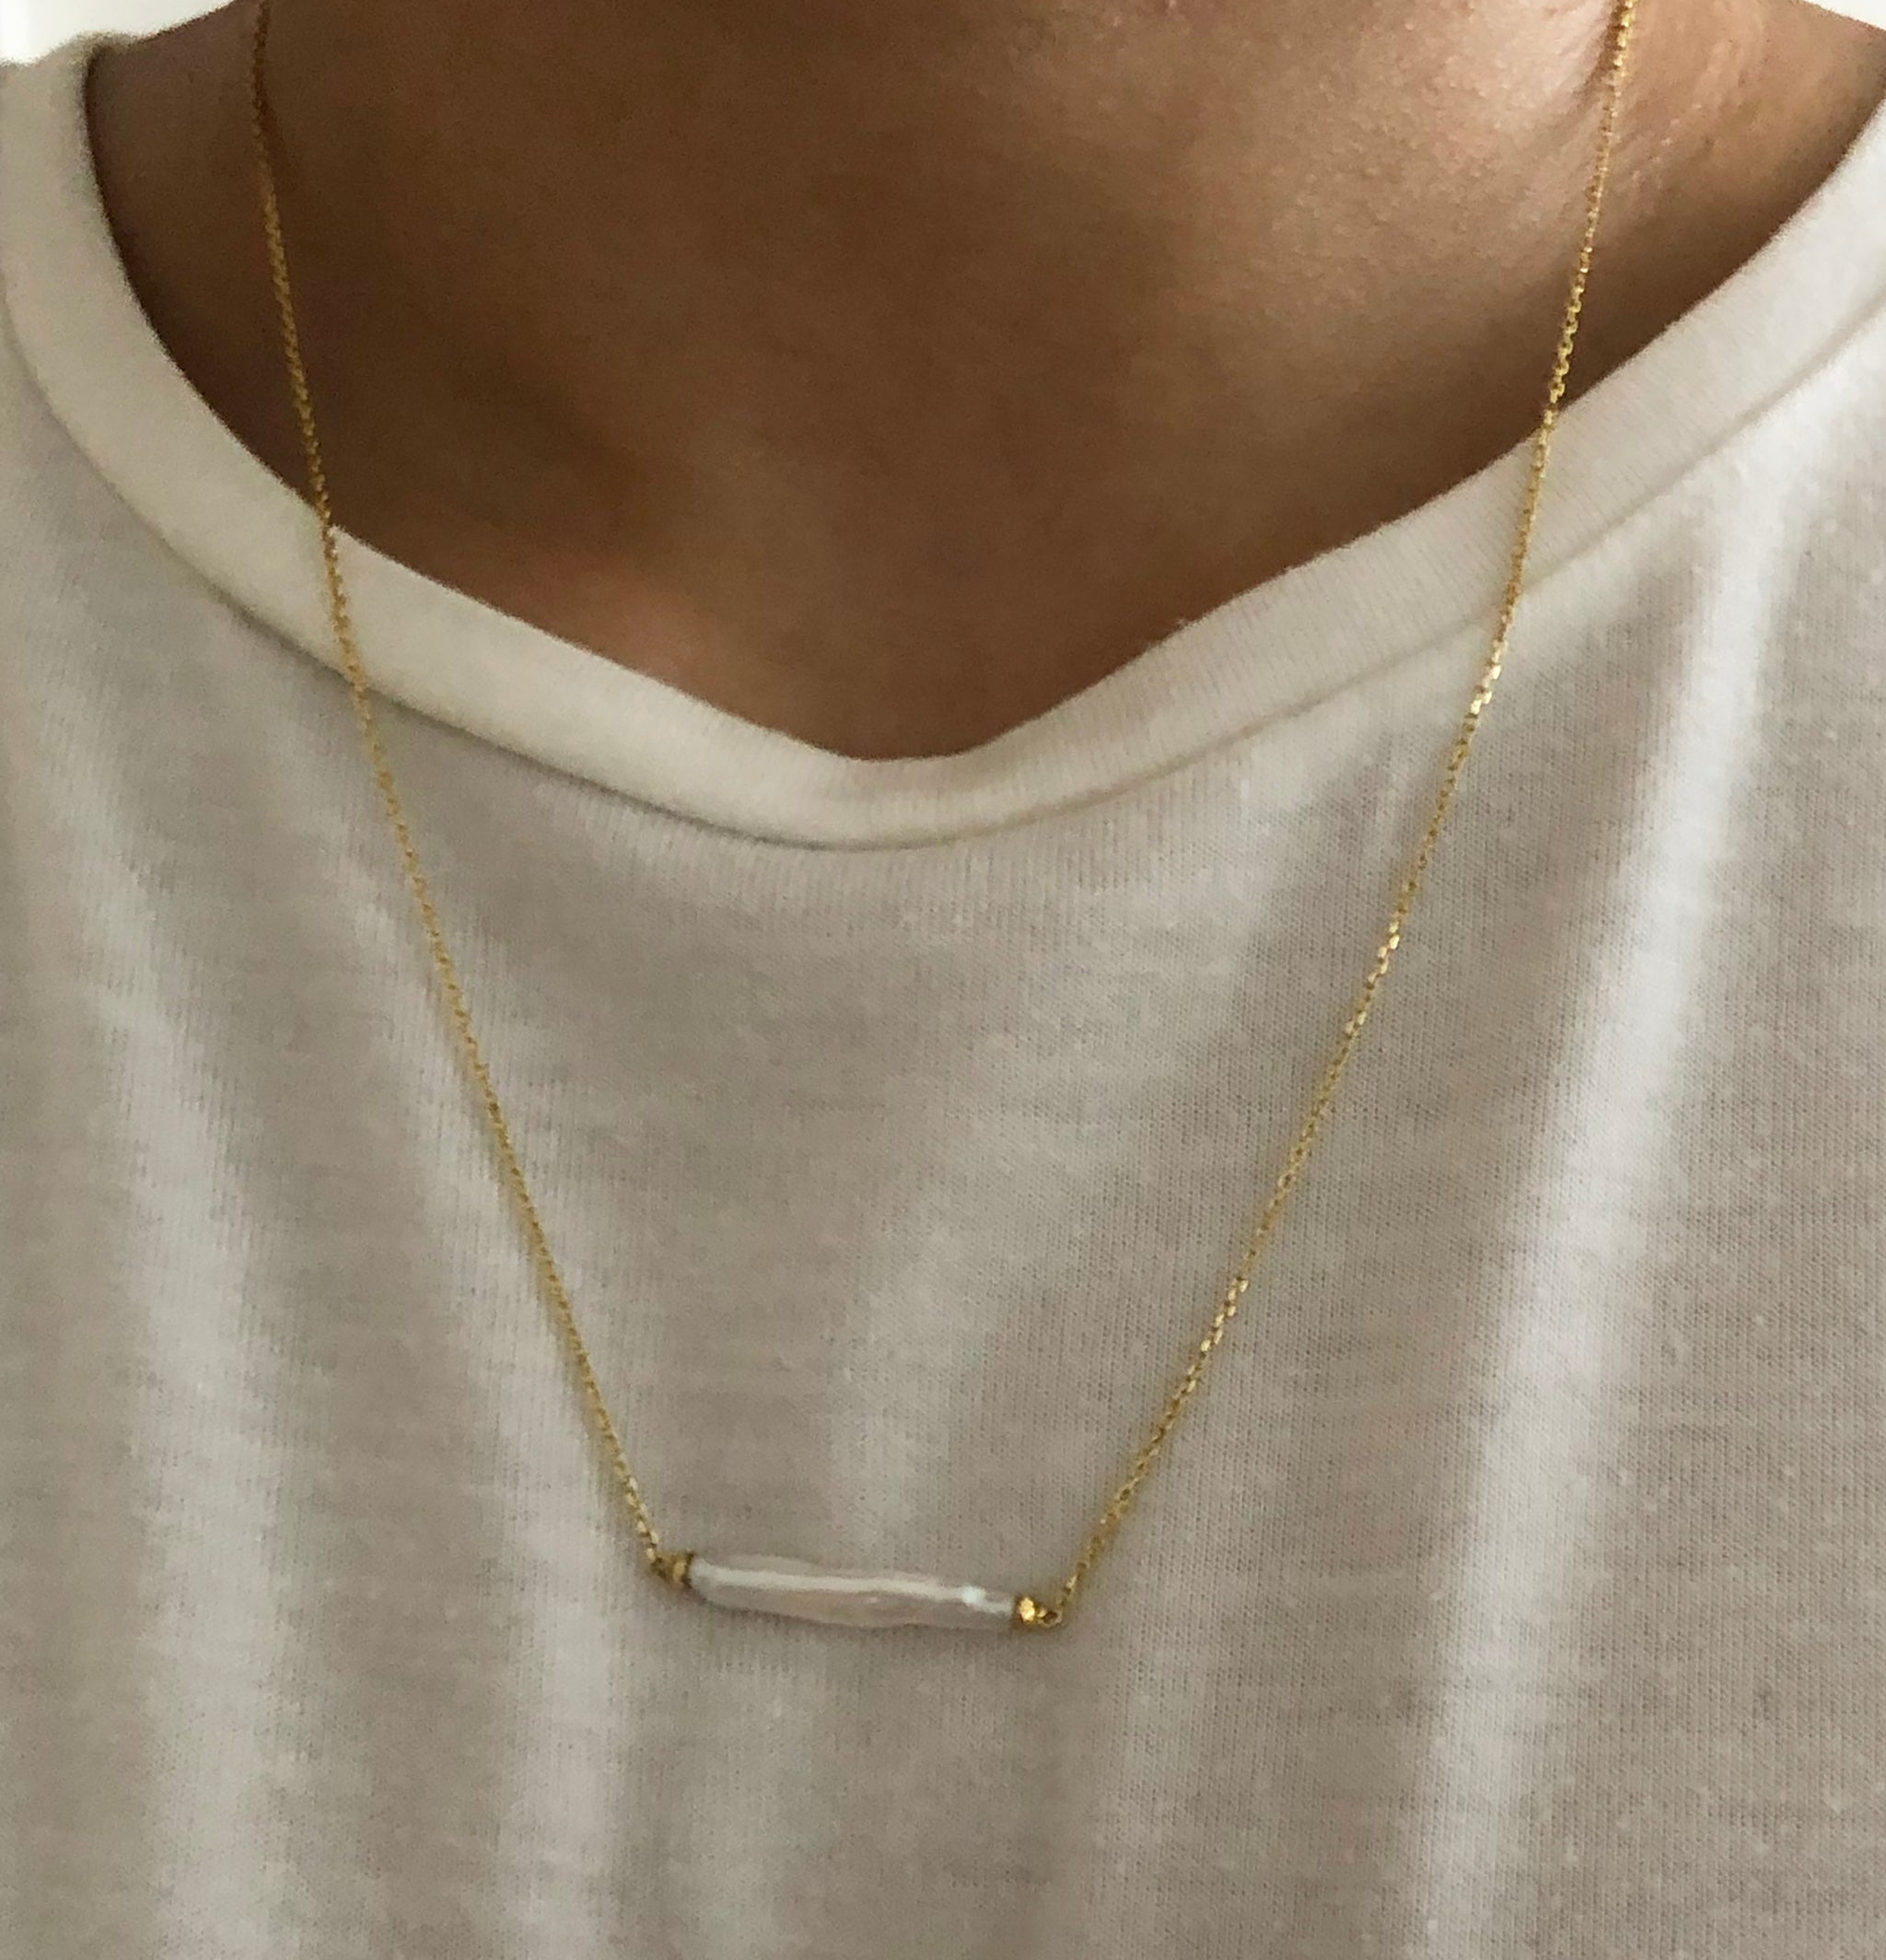 Keshi Pearl Adjustable Necklace